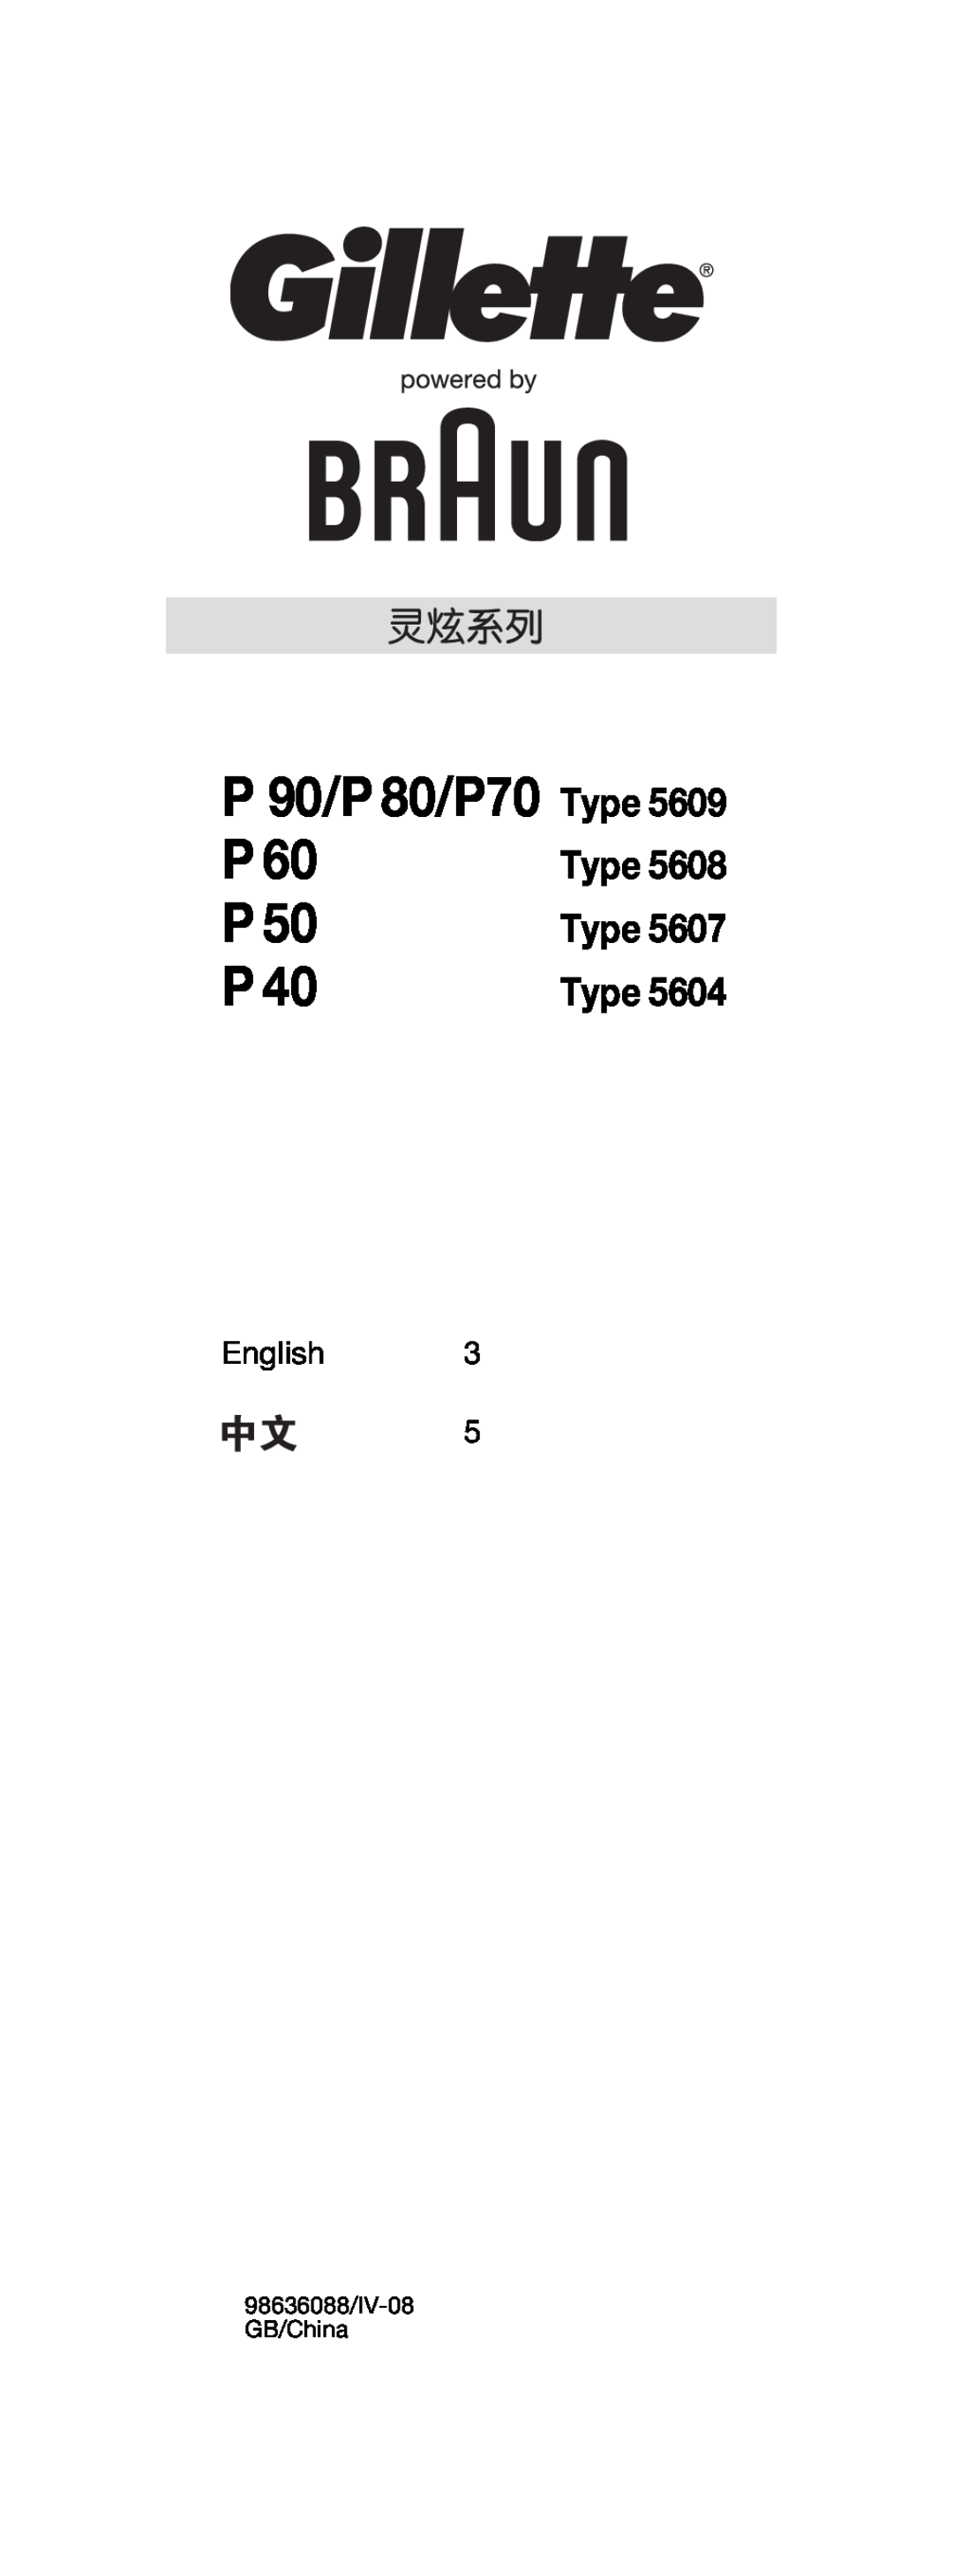 Braun P50, P90, P60, P40, P80 manual English, P 90/P 80/P70 P, P 50 P, Type Type Type Type 